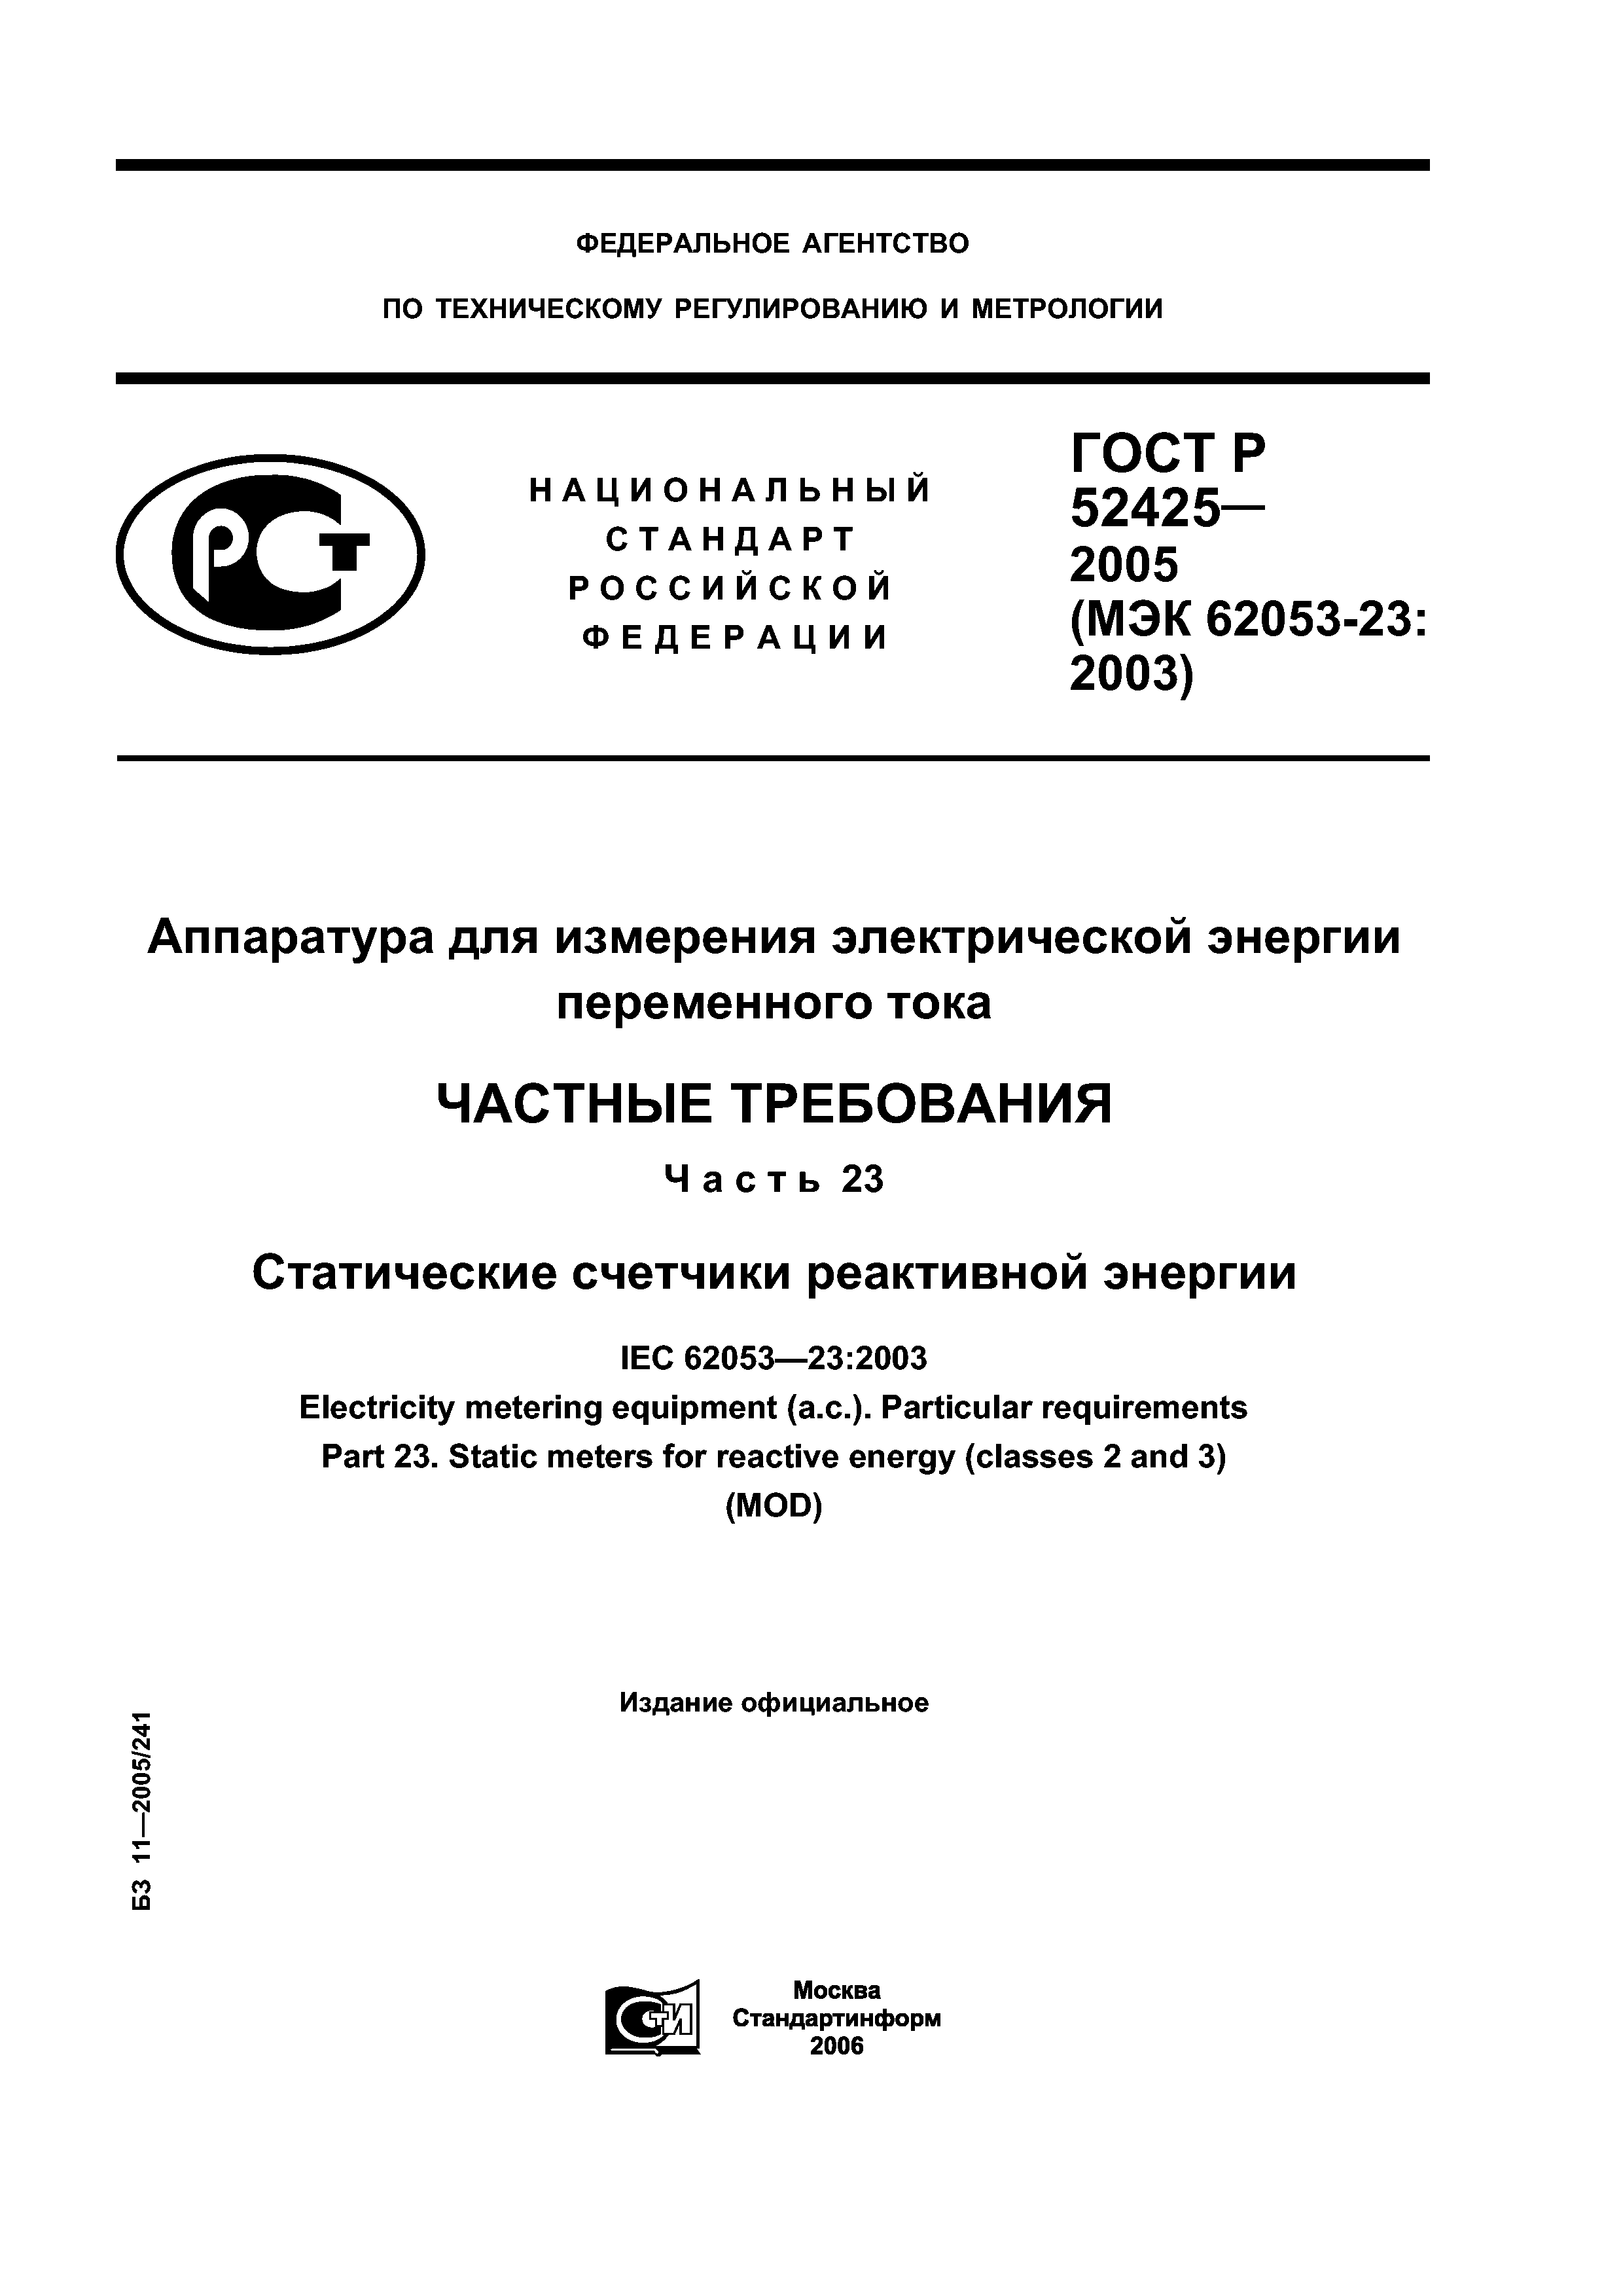 ГОСТ Р 52425-2005